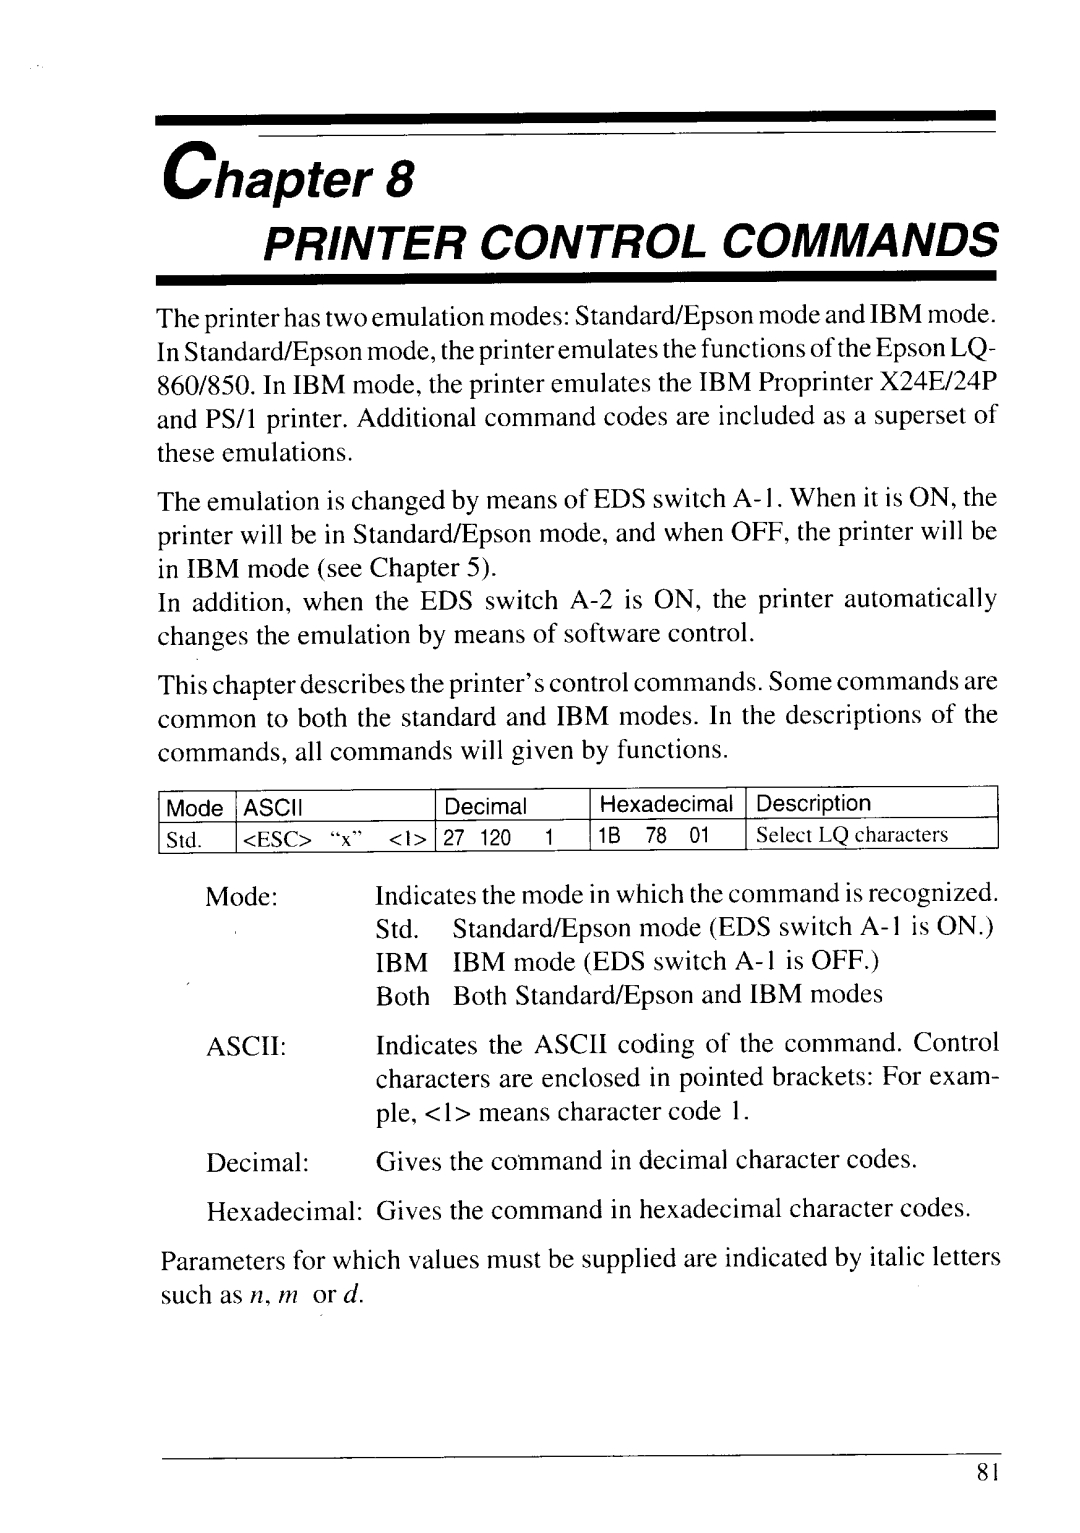 Star Micronics NX-2430 manual Printer Control Commands, chapter 